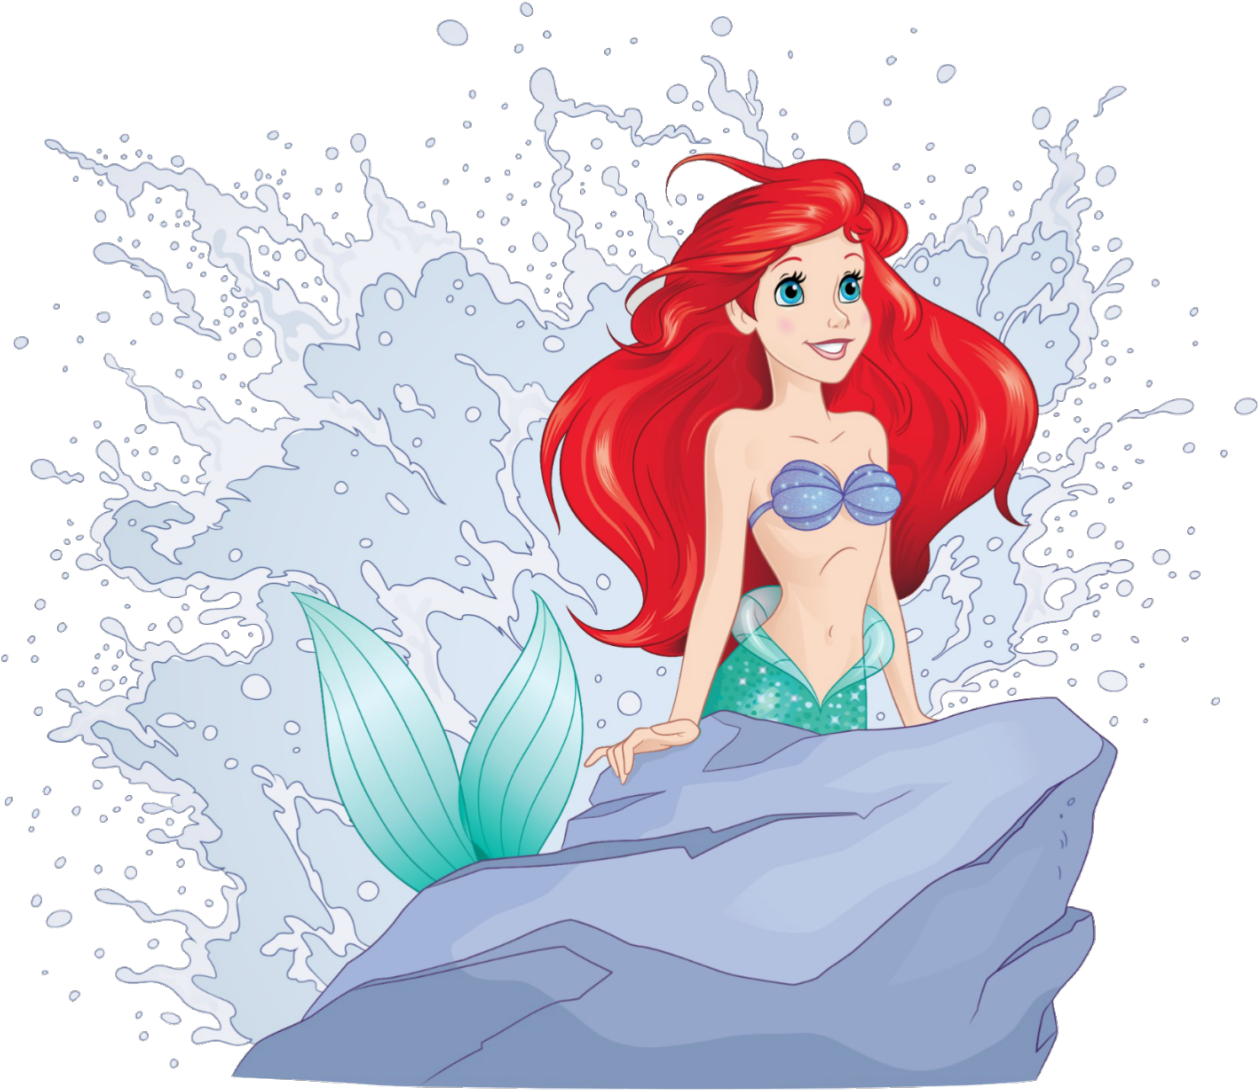 Red Haired Mermaid Splash PNG image